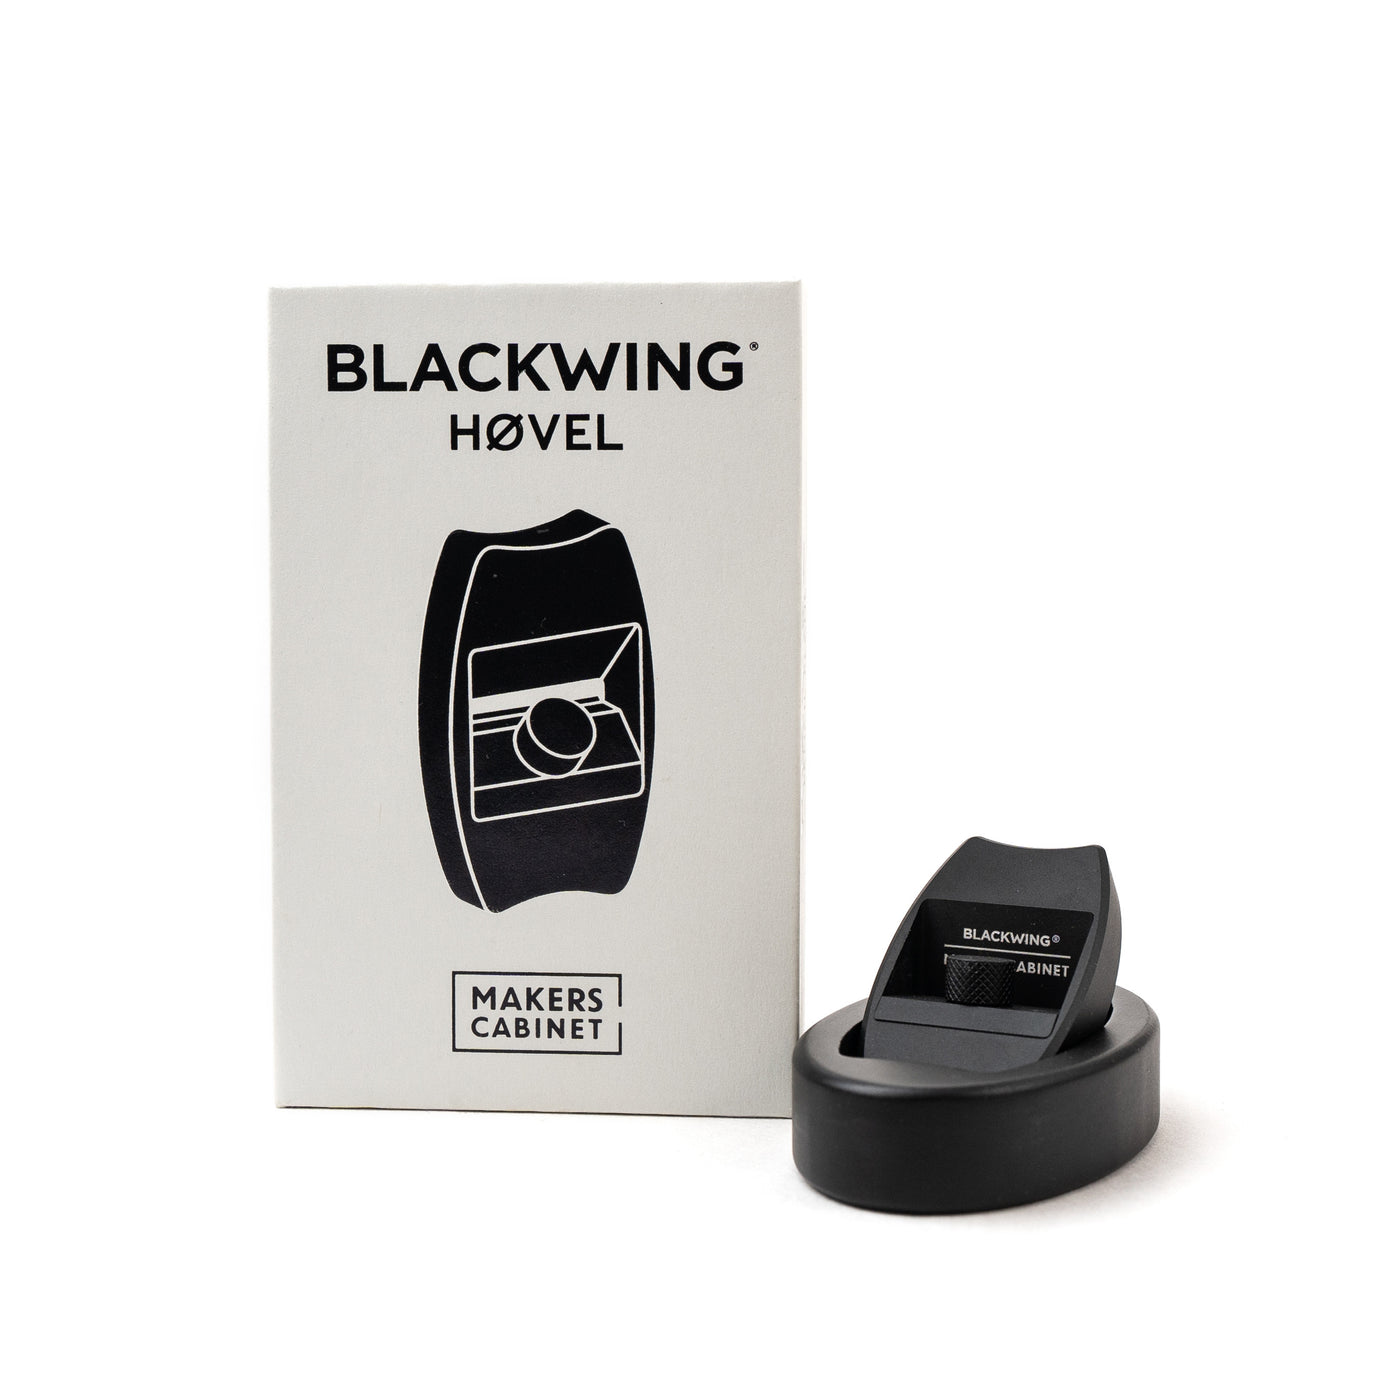 BLACKWING Limited Edition Hovel Pencil Plane Default Title